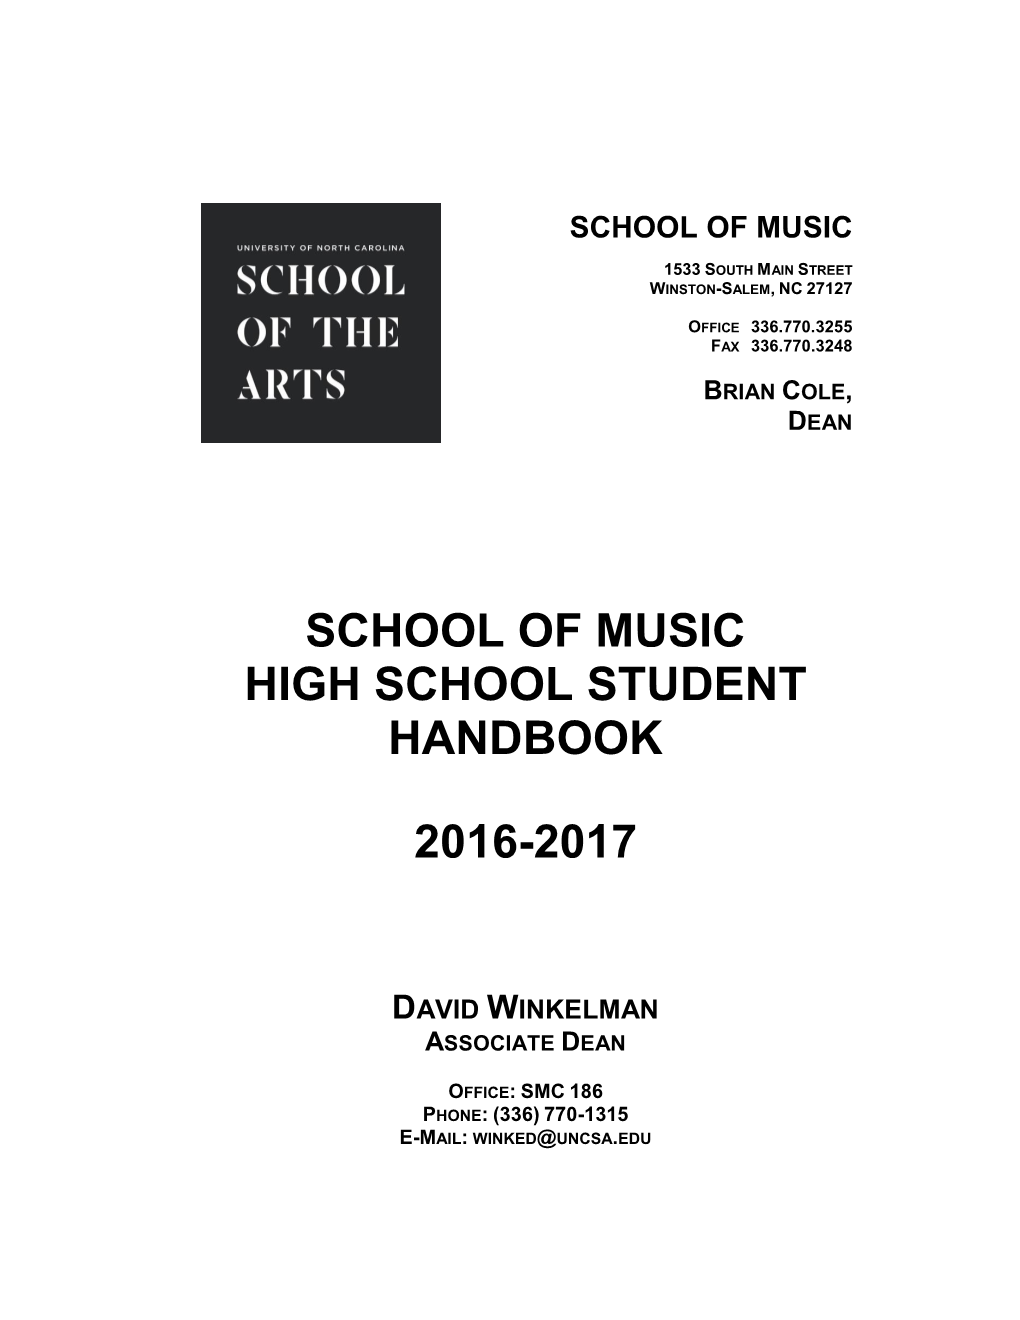 School of Music High School Student Handbook 2016-2017